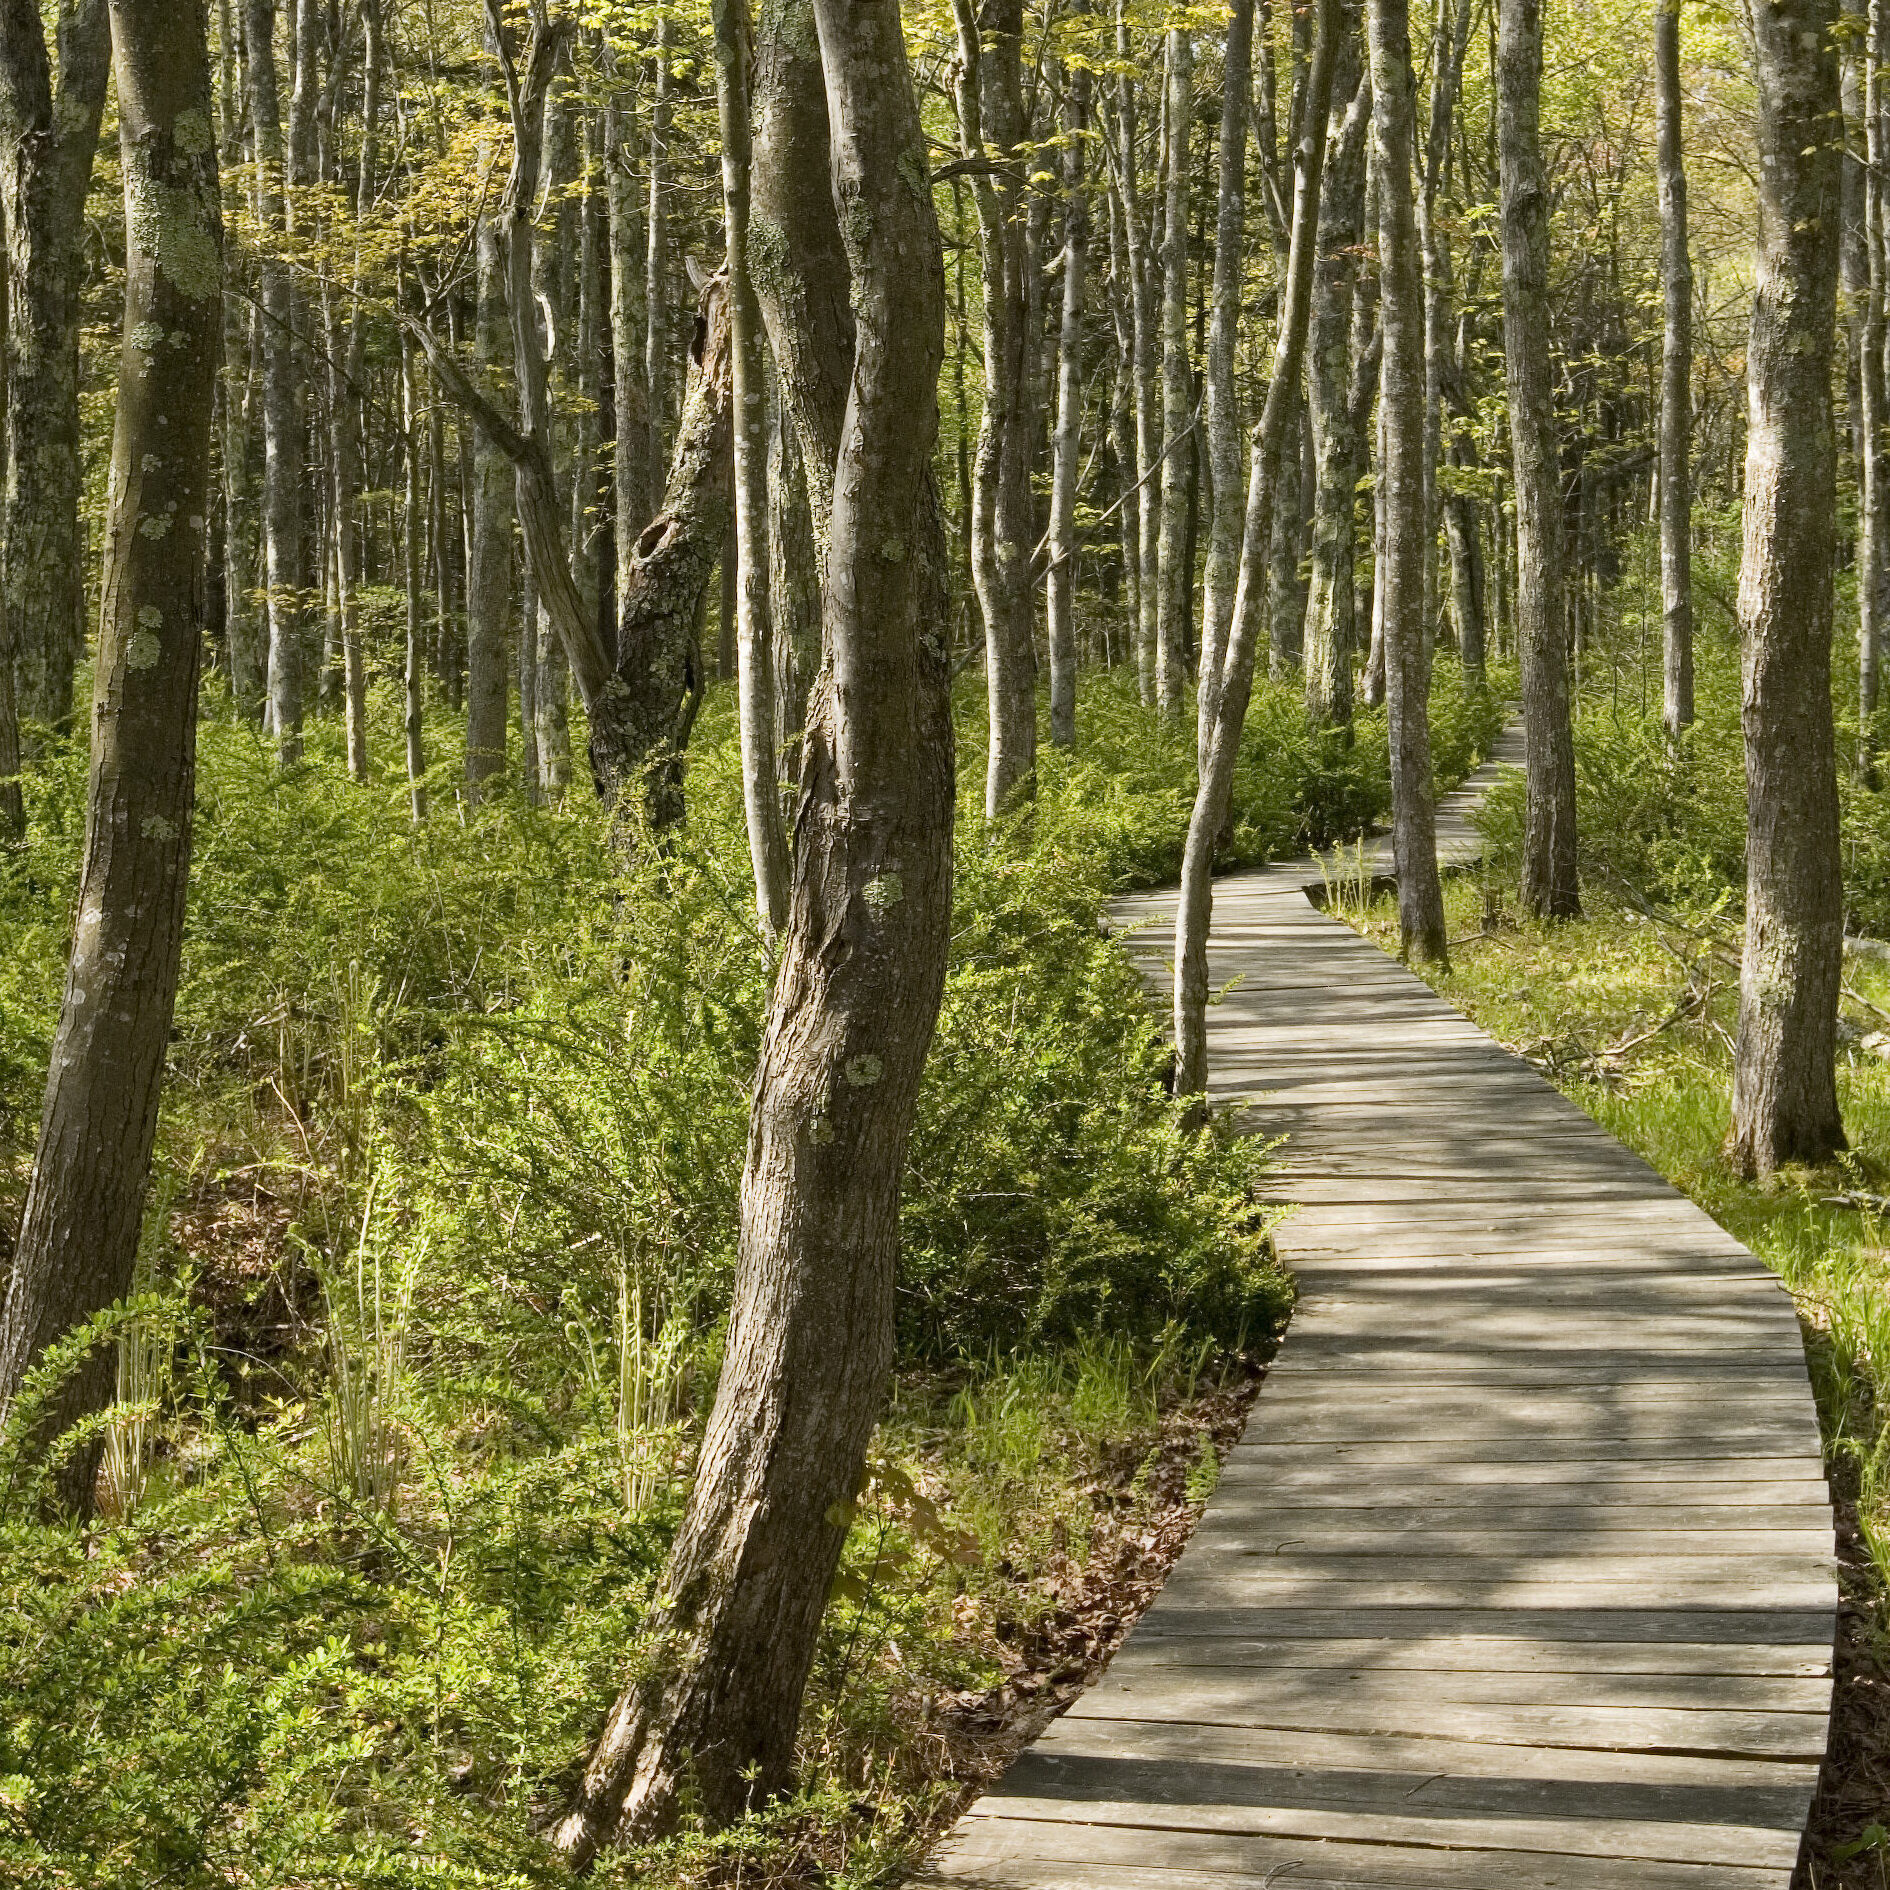 Boardwalk through woods in early spring